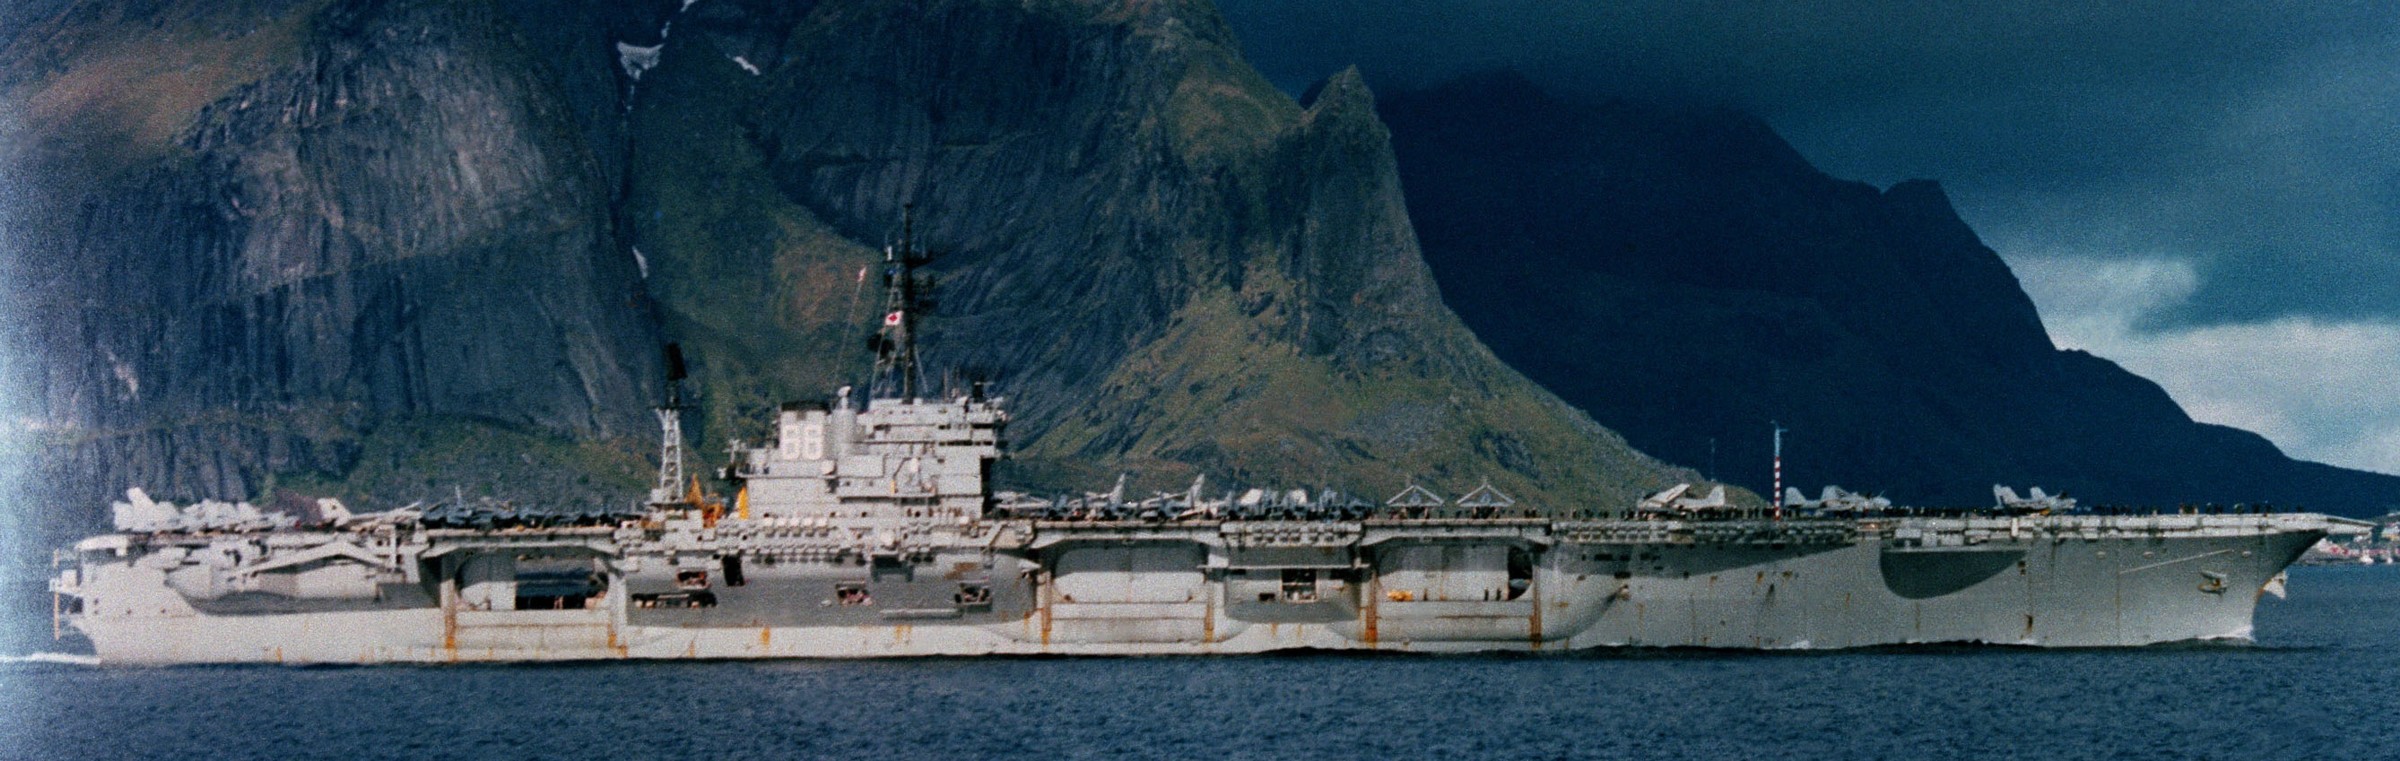 cv-66 uss america kitty hawk class aircraft carrier us navy nato ocean safari norway 1985 87